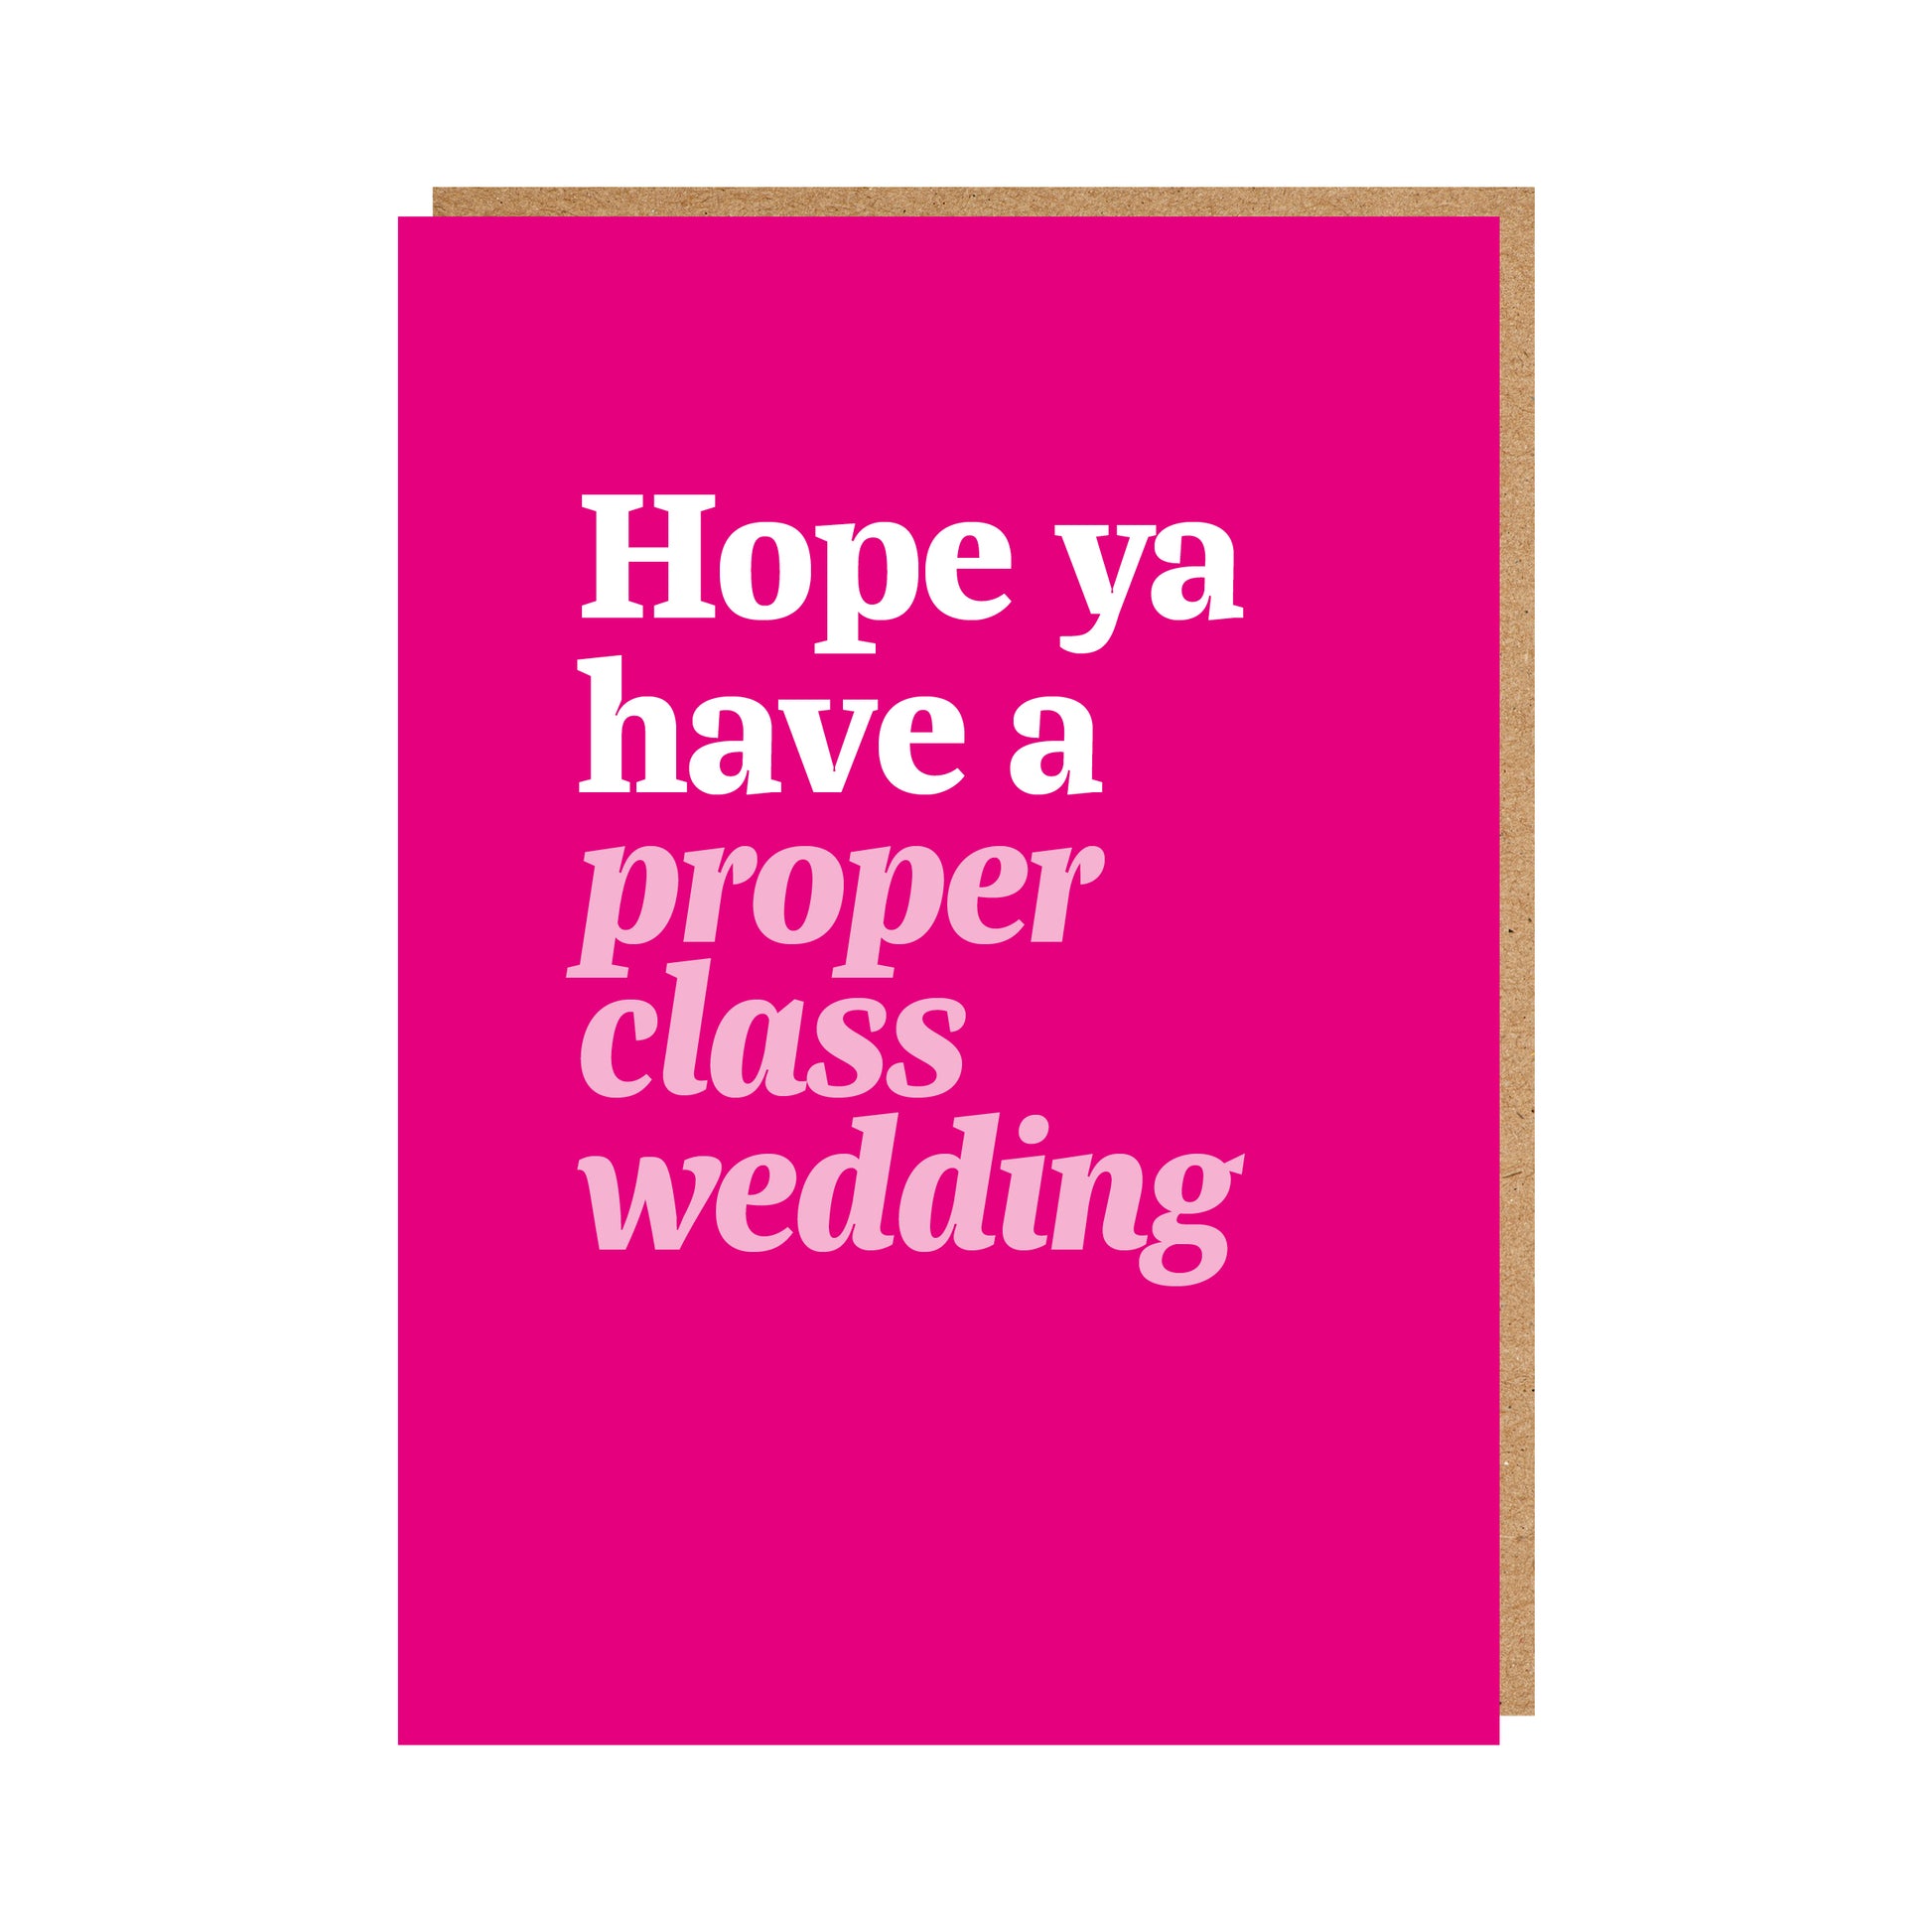 Wedding Card reading "Hope ya have a proper class wedding"